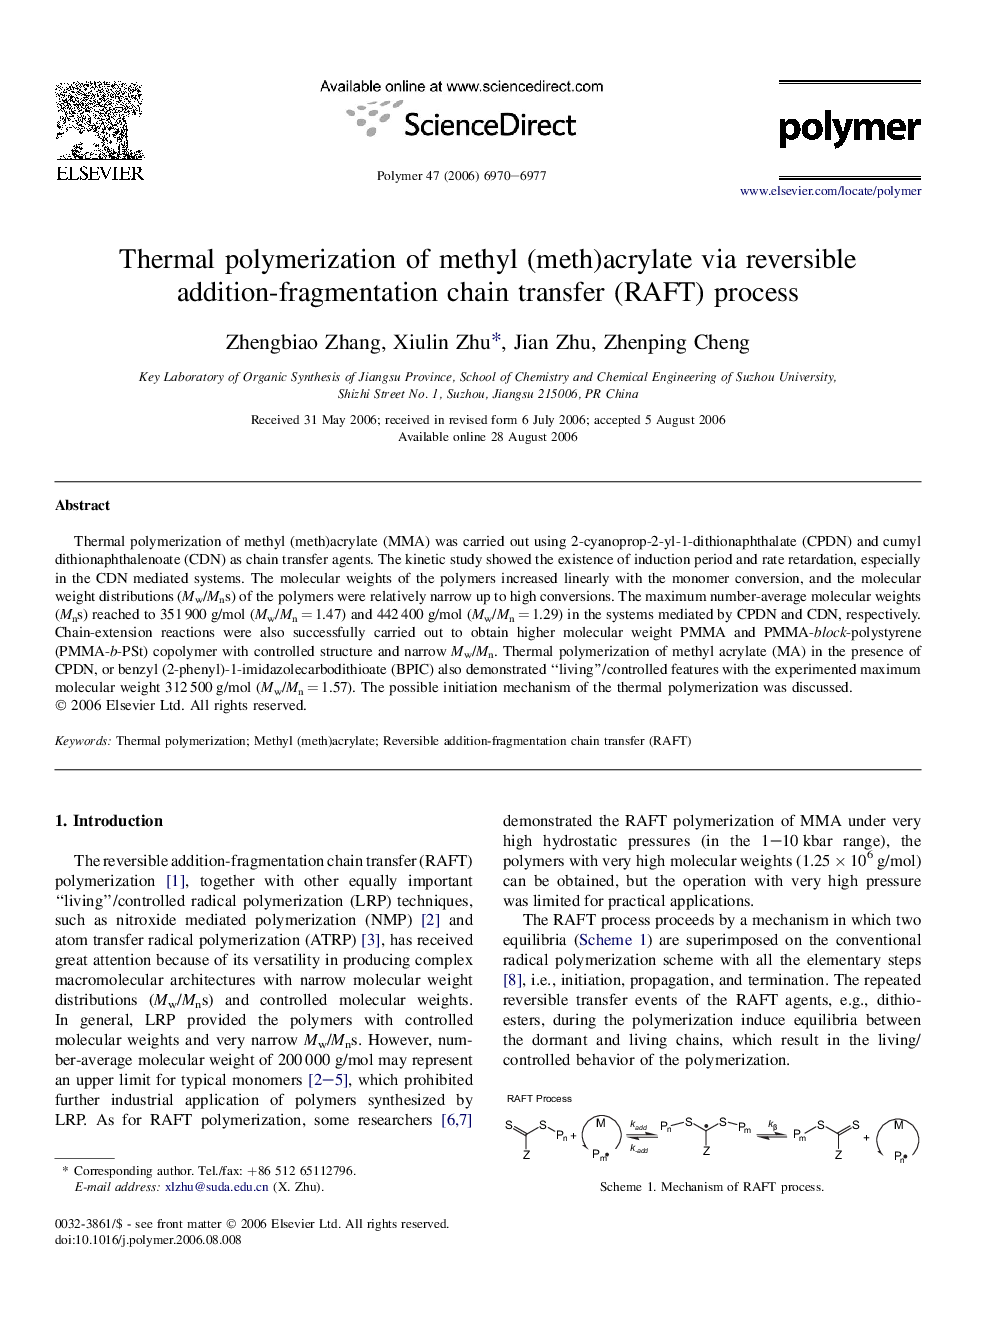 Thermal polymerization of methyl (meth)acrylate via reversible addition-fragmentation chain transfer (RAFT) process